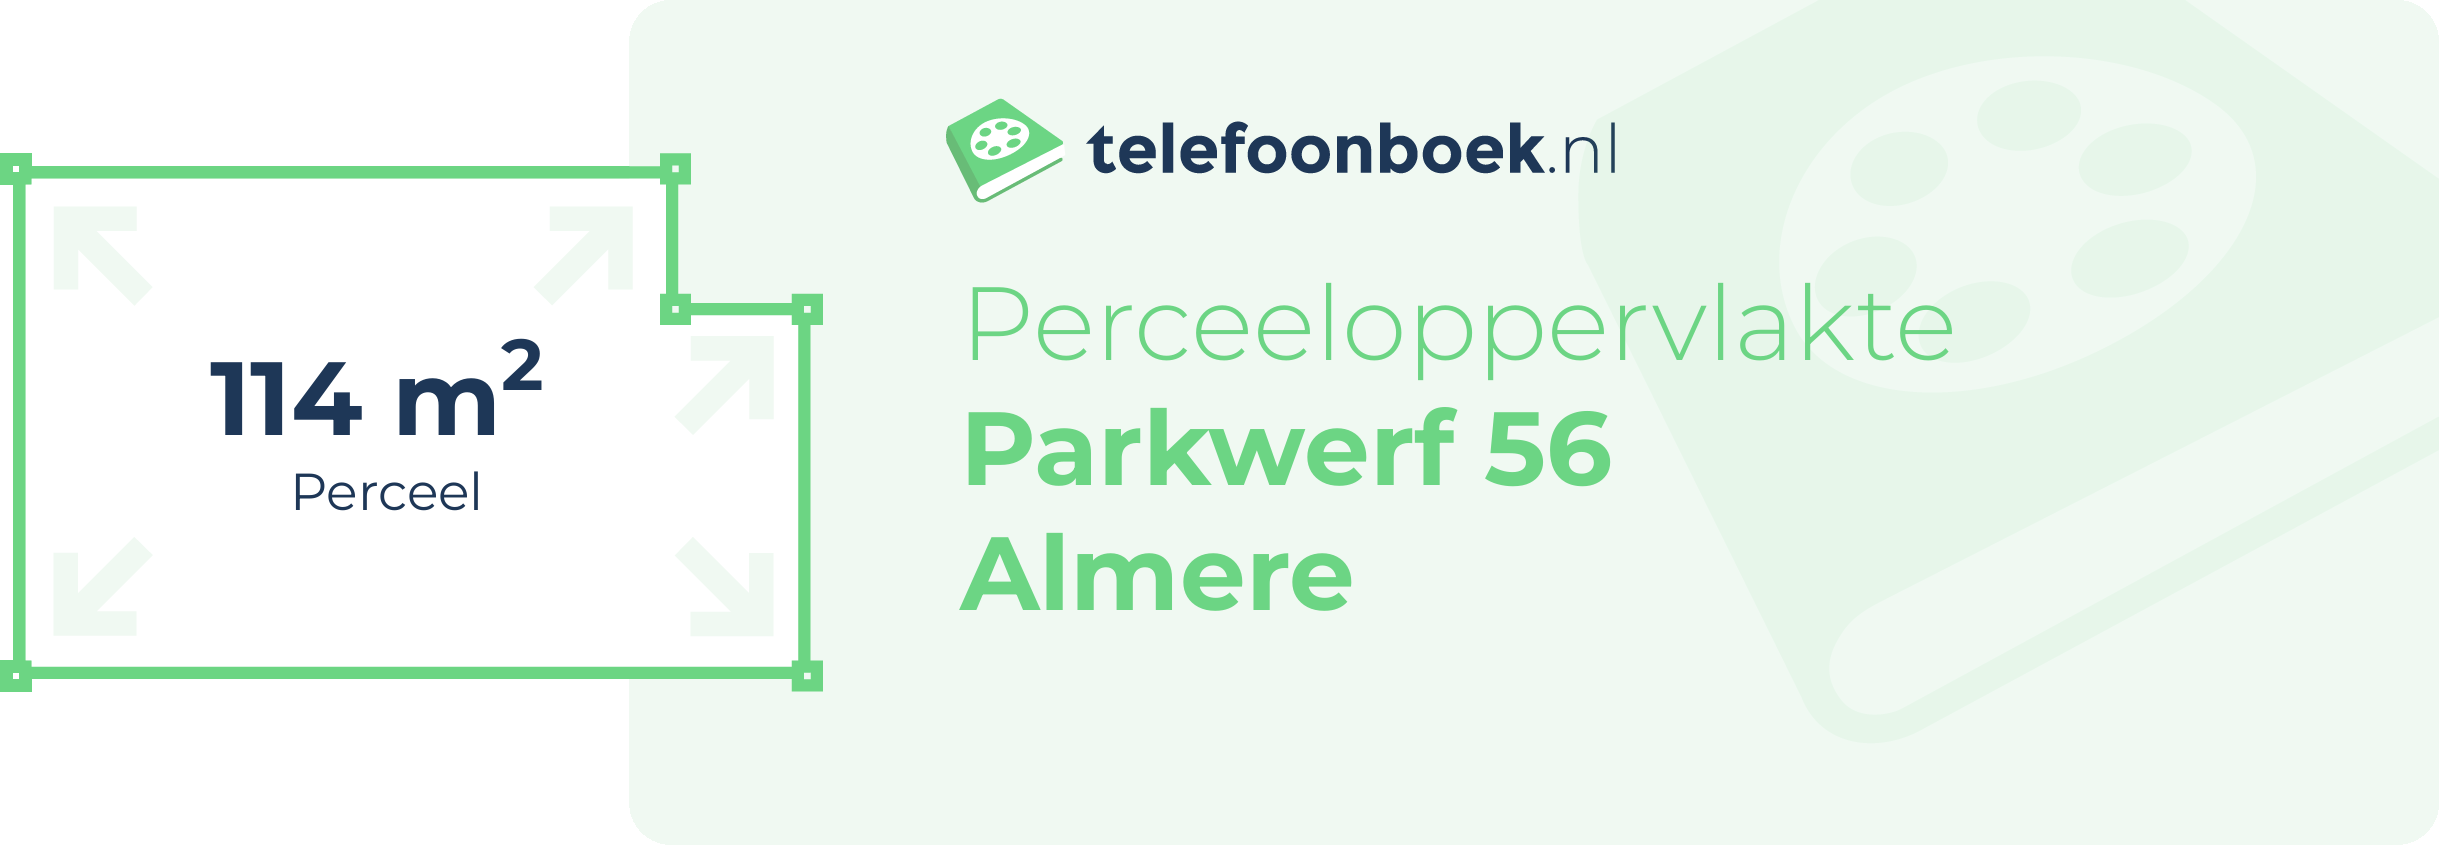 Perceeloppervlakte Parkwerf 56 Almere